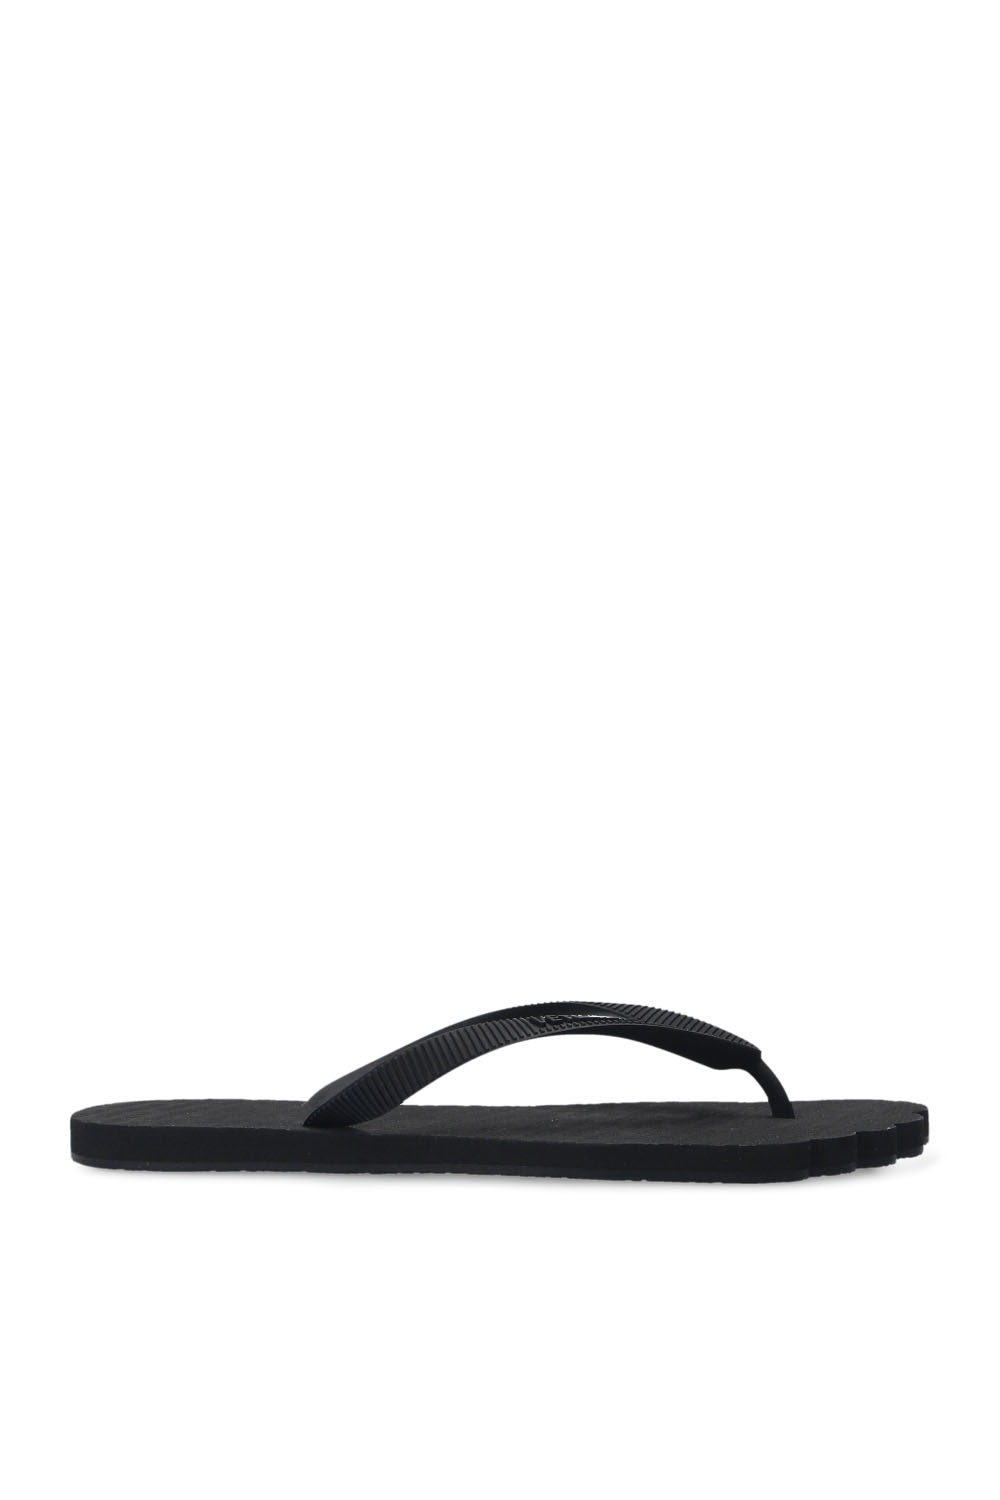 black flip flops canada